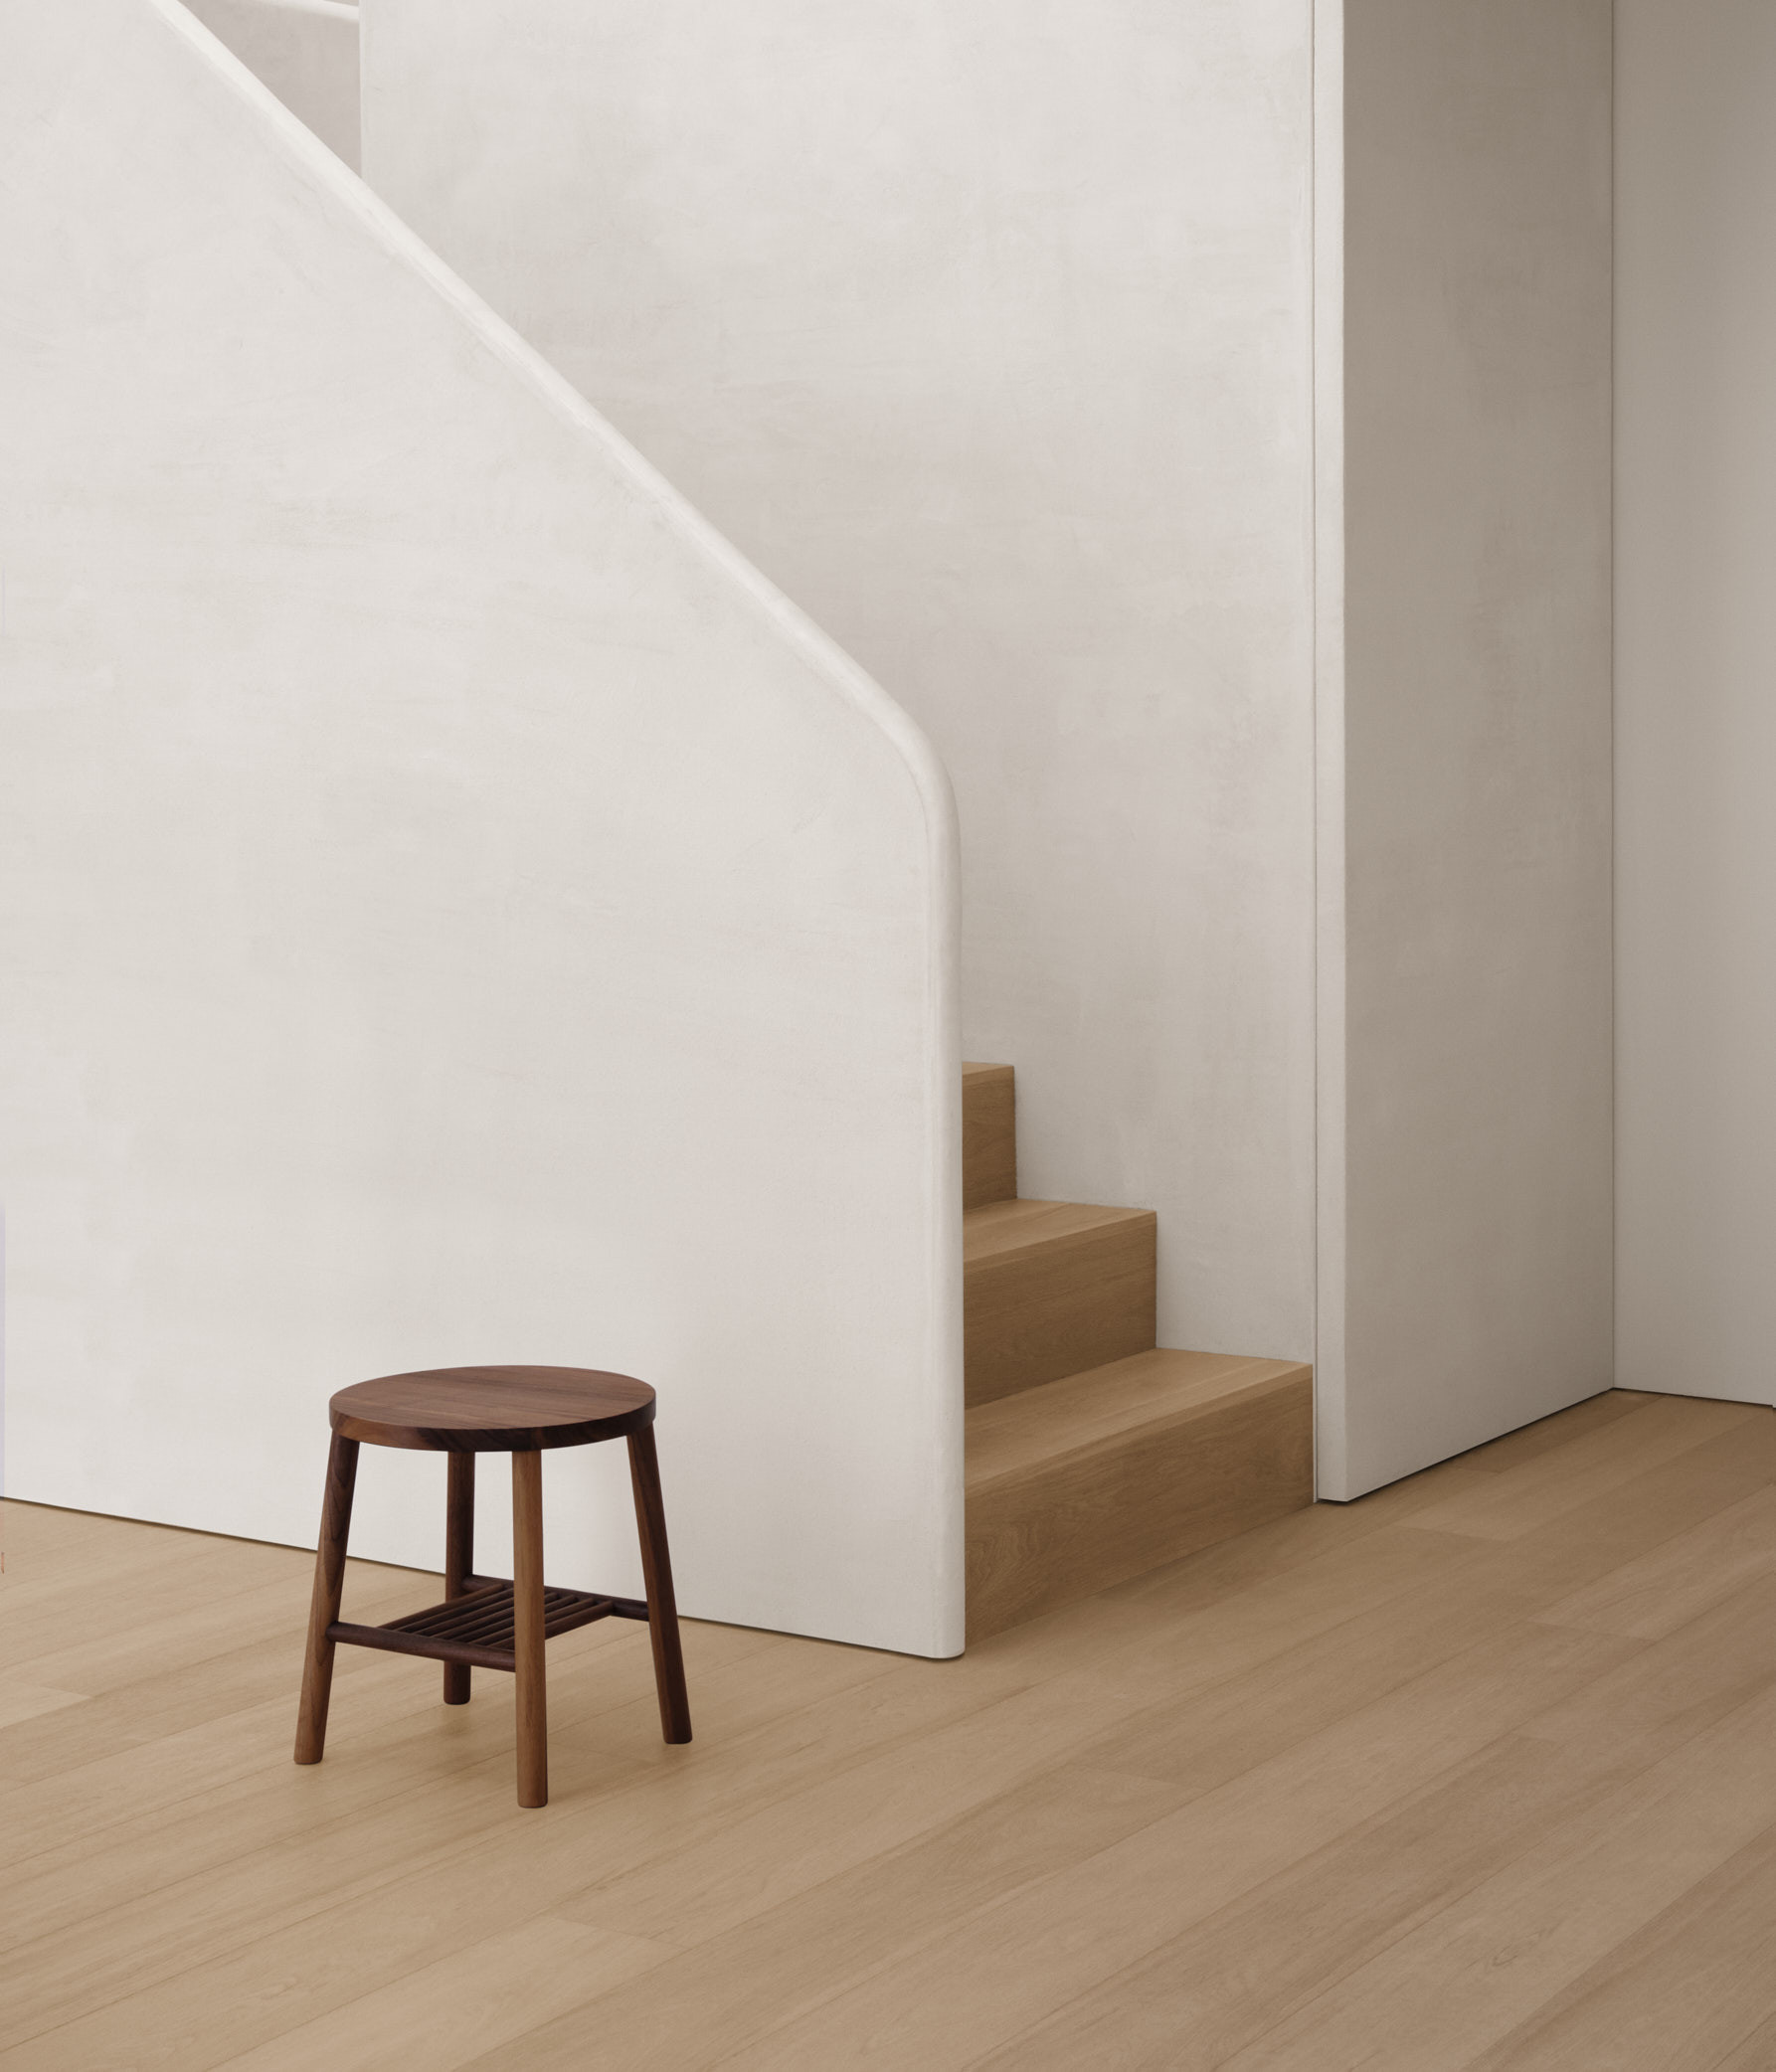 walnut stool against textured stair case